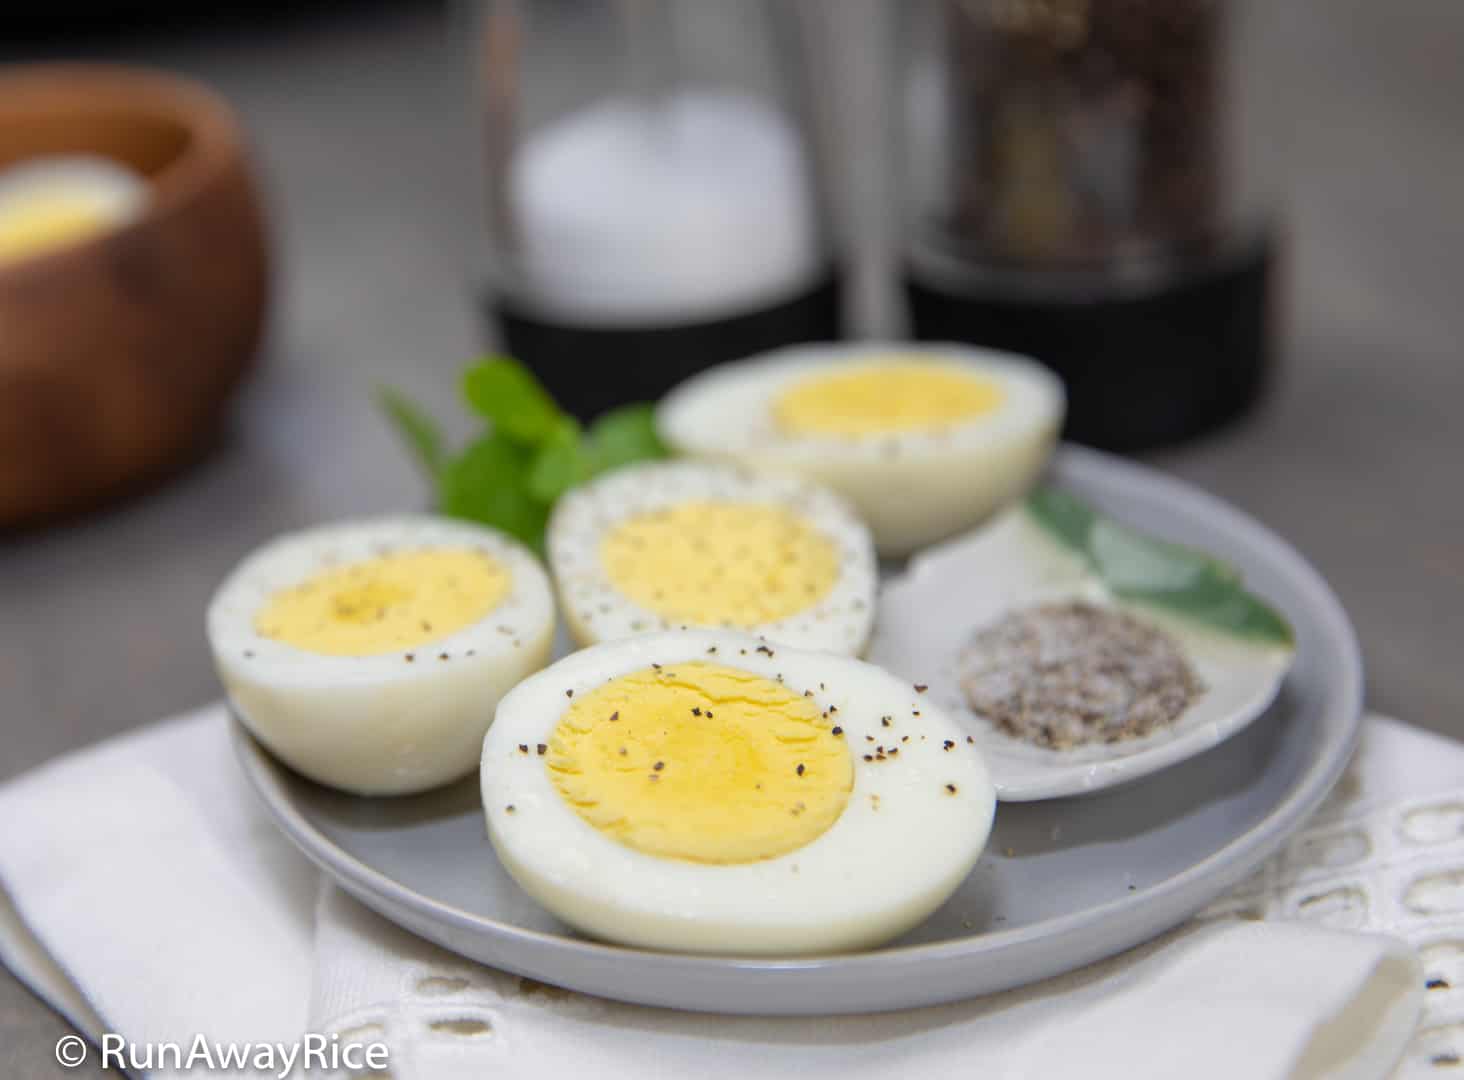 http://runawayrice.com/wp-content/uploads/2019/02/Instant-Pot-Hard-Boiled-Eggs-Sprinkled-with-Salt-and-Pepper.jpg